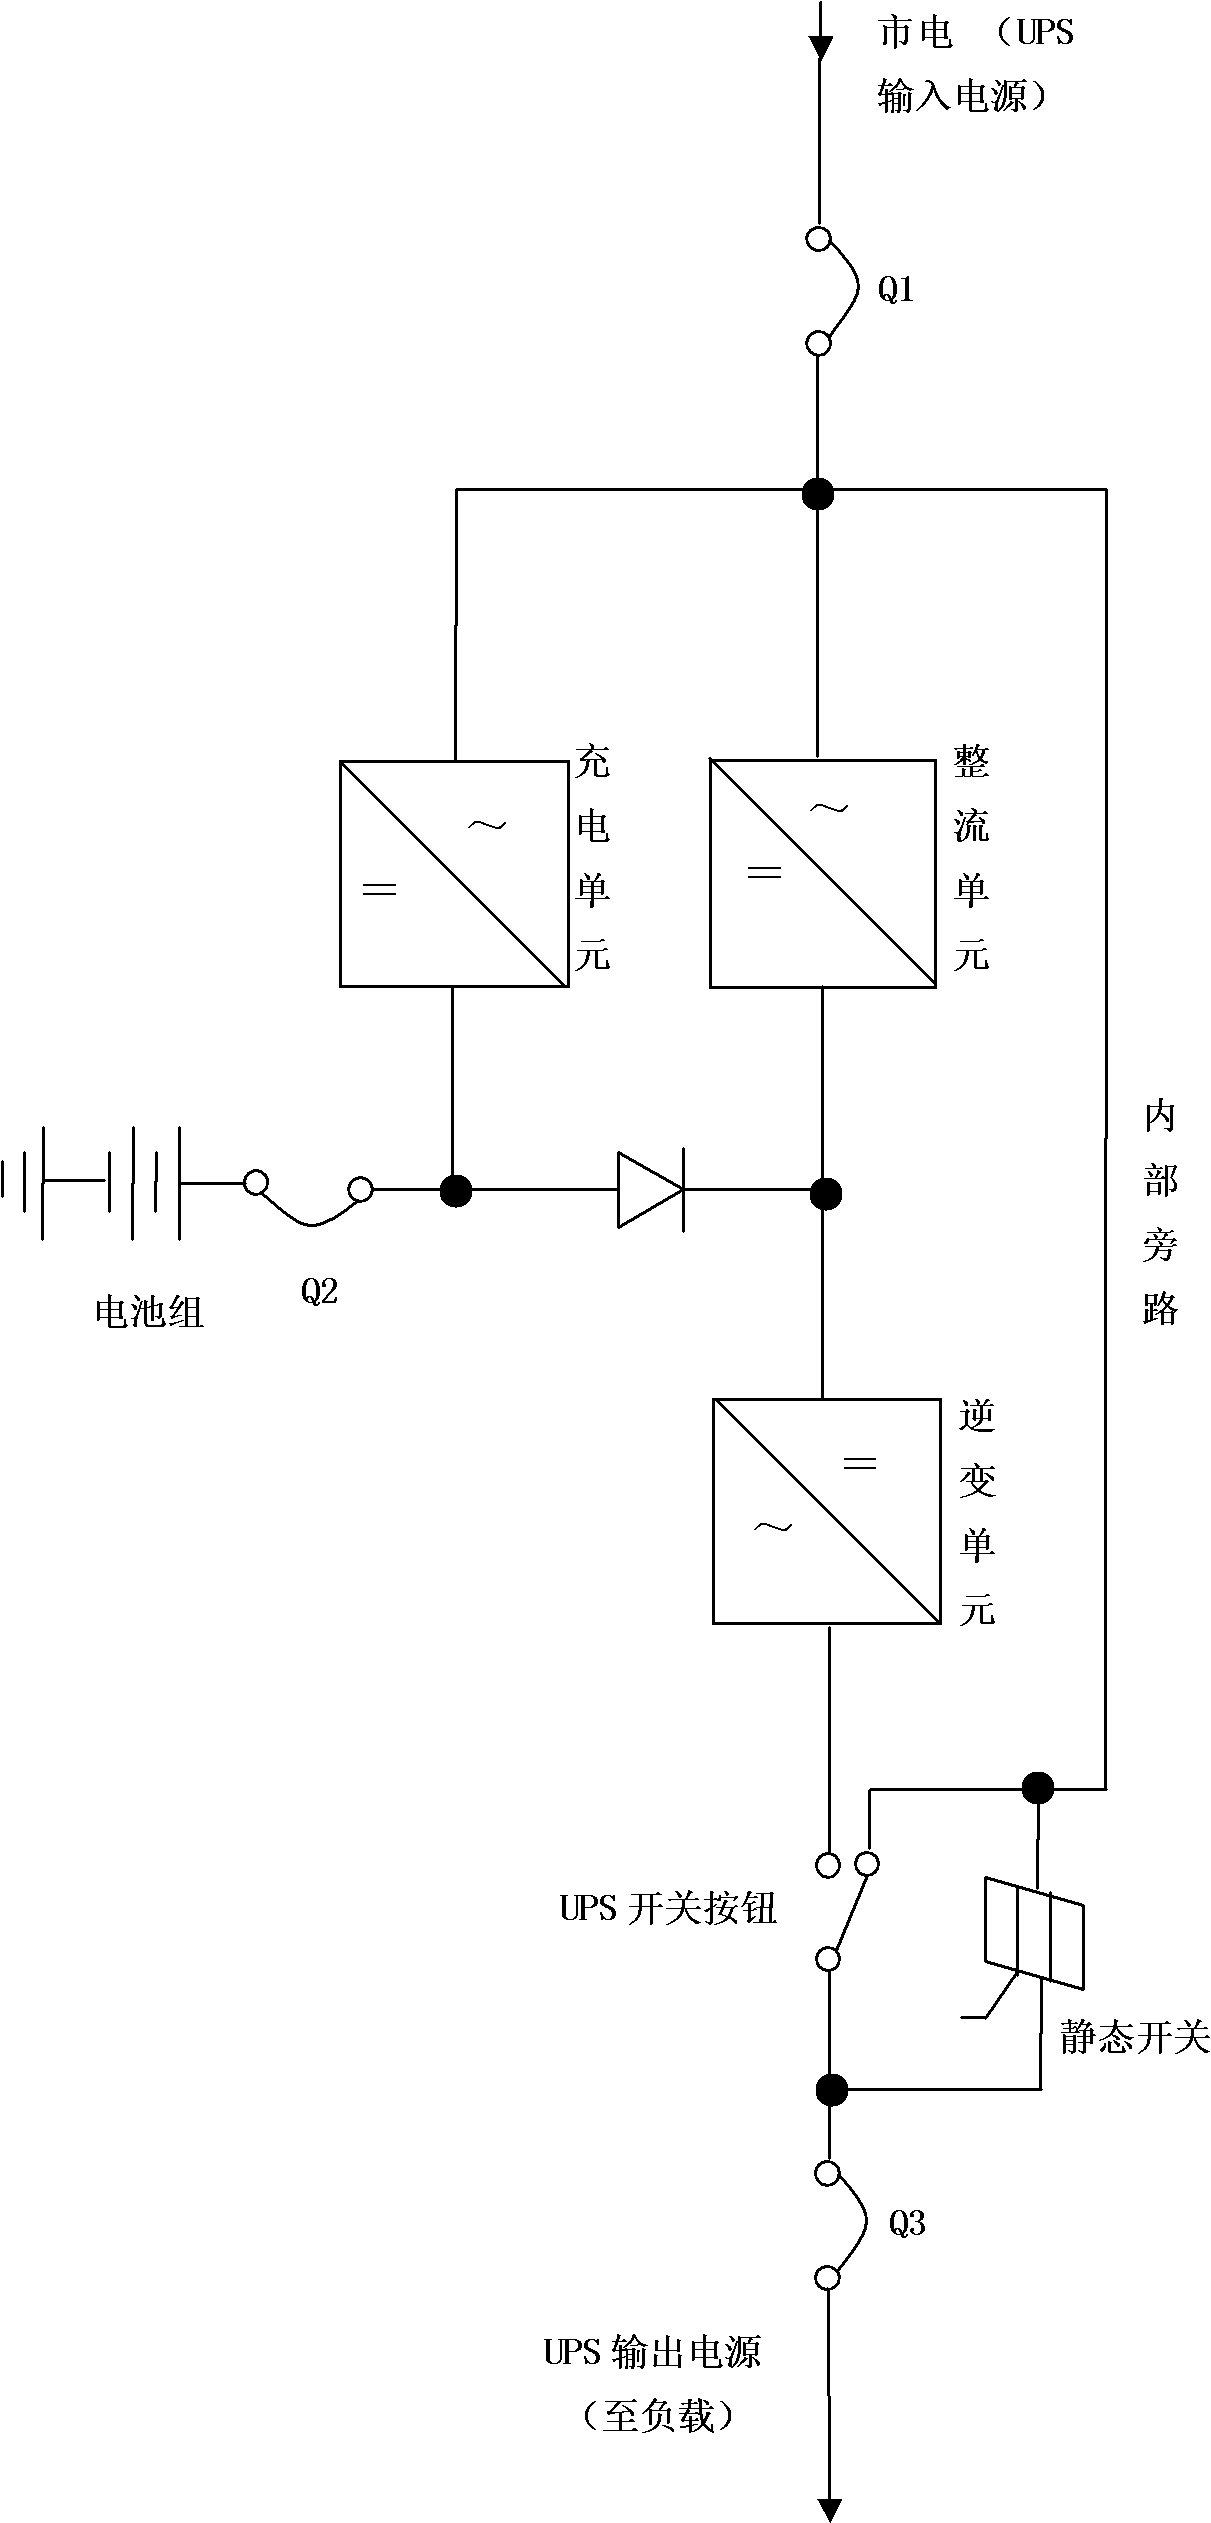 Test method for external bypass of uninterrupted power supply (UPS)